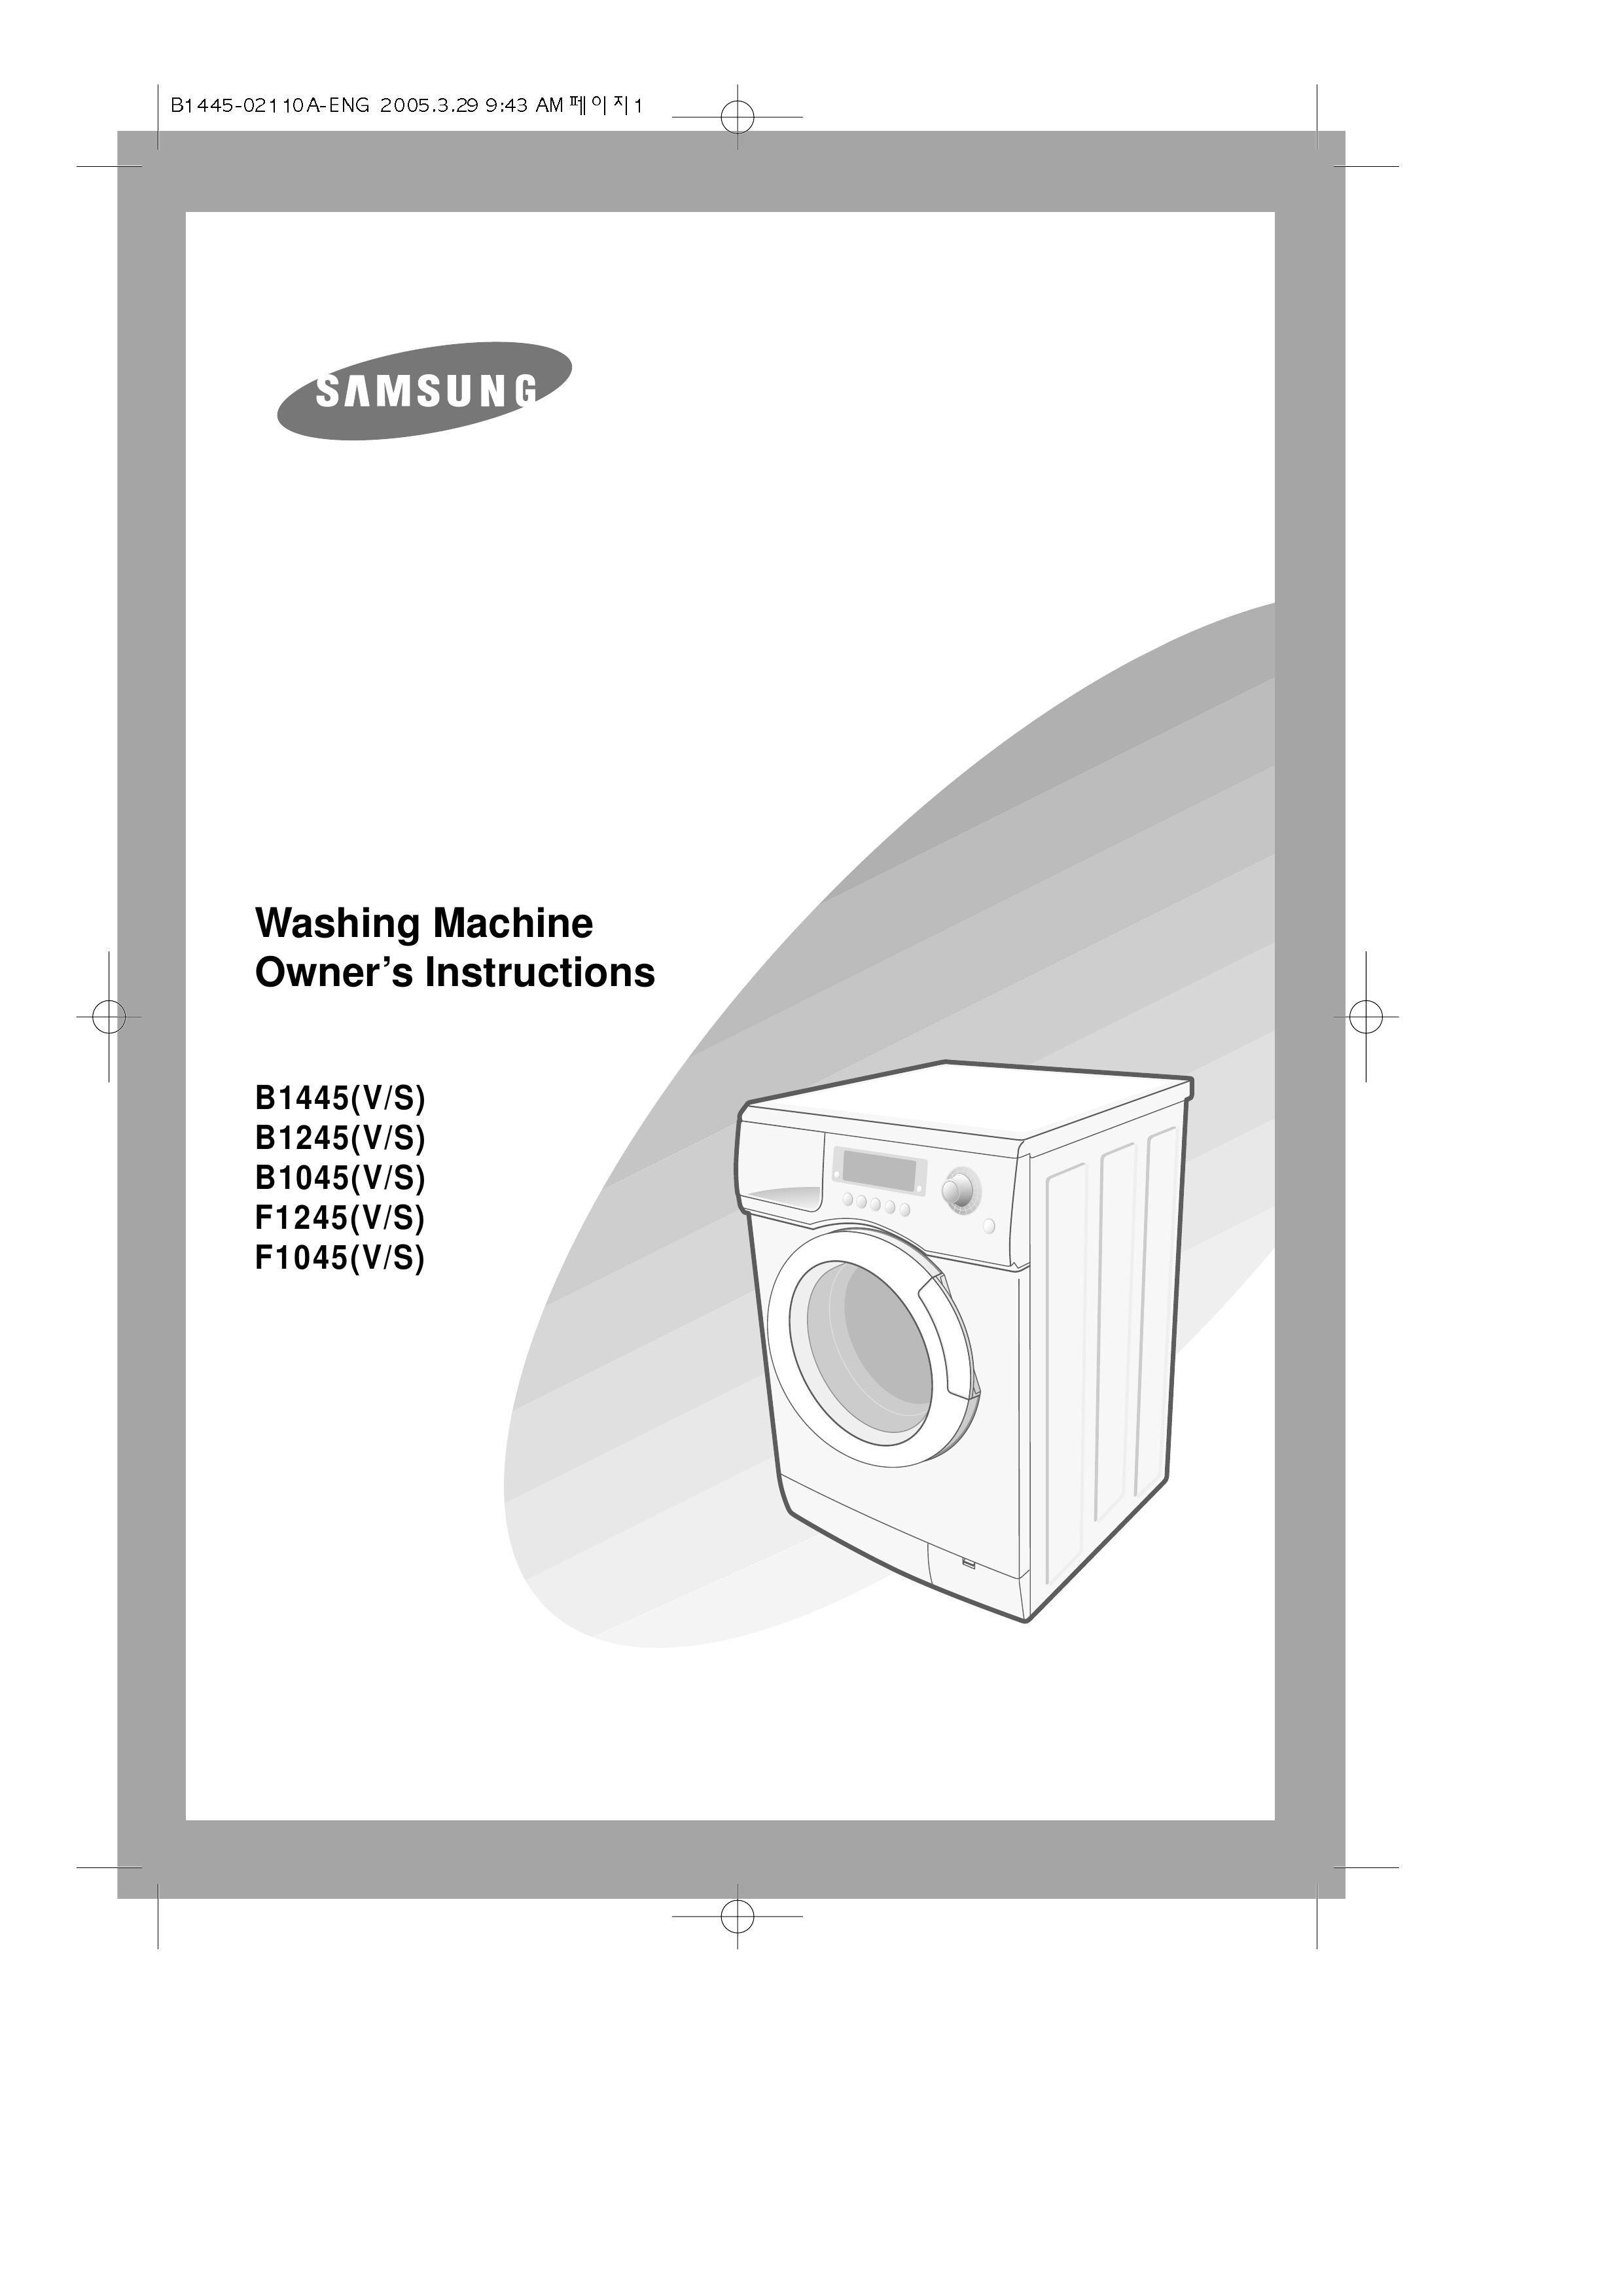 Samsung F1245(V/S) Washer User Manual